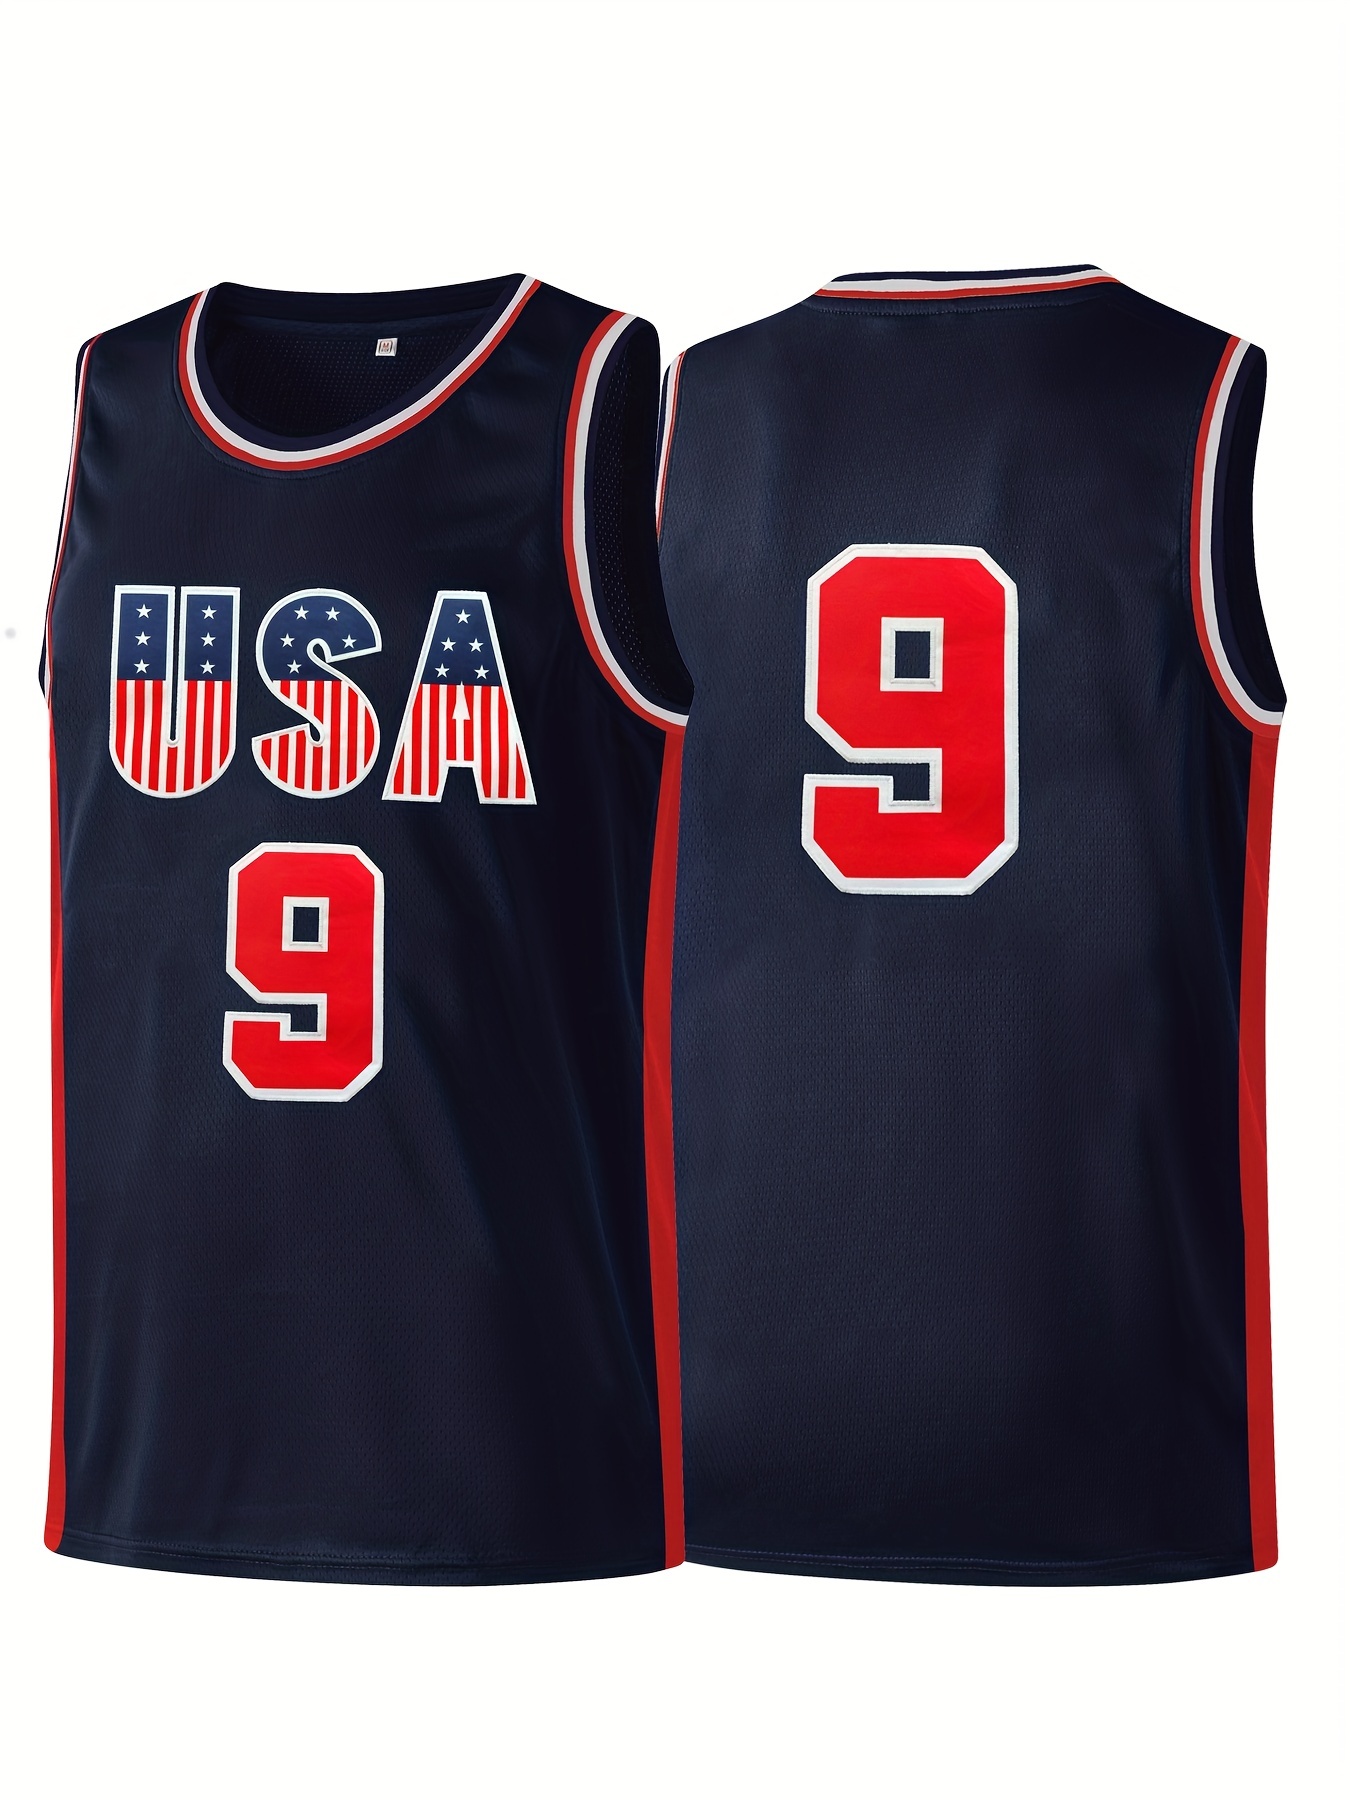 Men's #9 USATeam Basketball Jerseys Retro Jersey Embroidered Stitched  Navy Blue Tank Top Sweatshirt